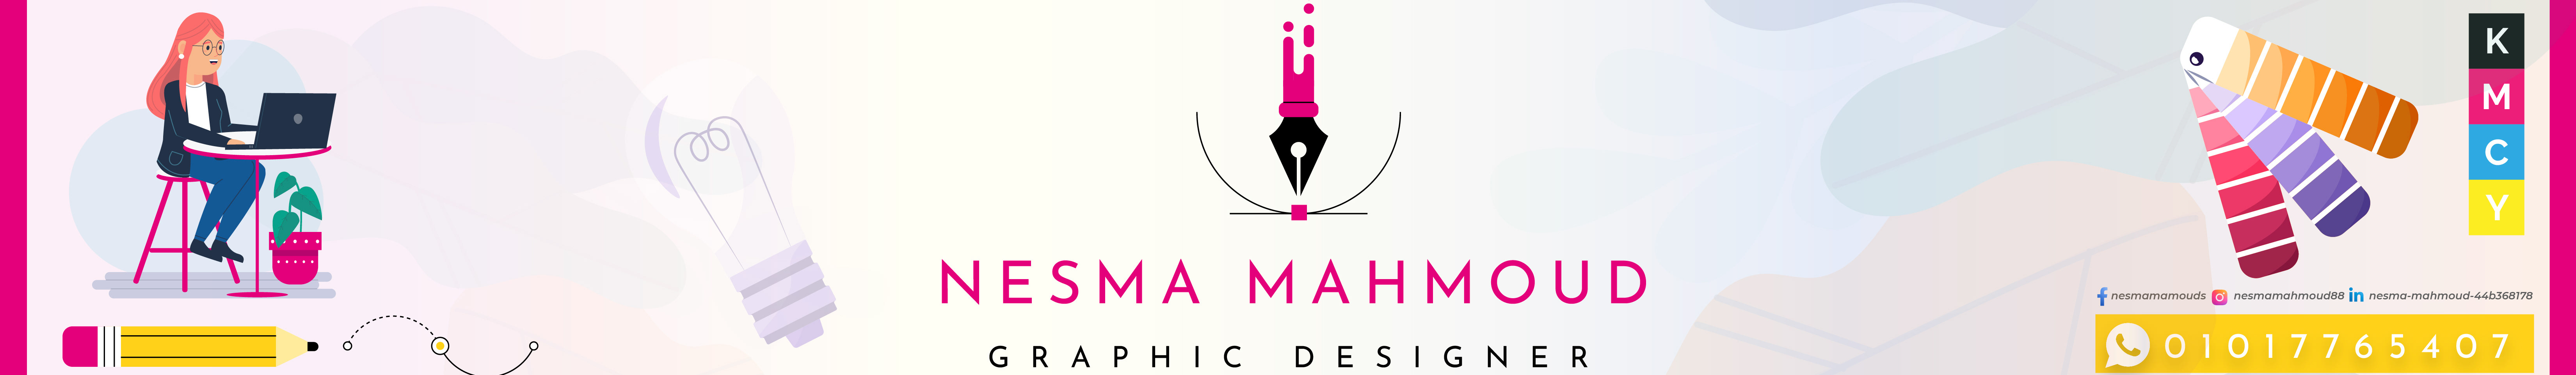 Nessma Mahmoud's profile banner